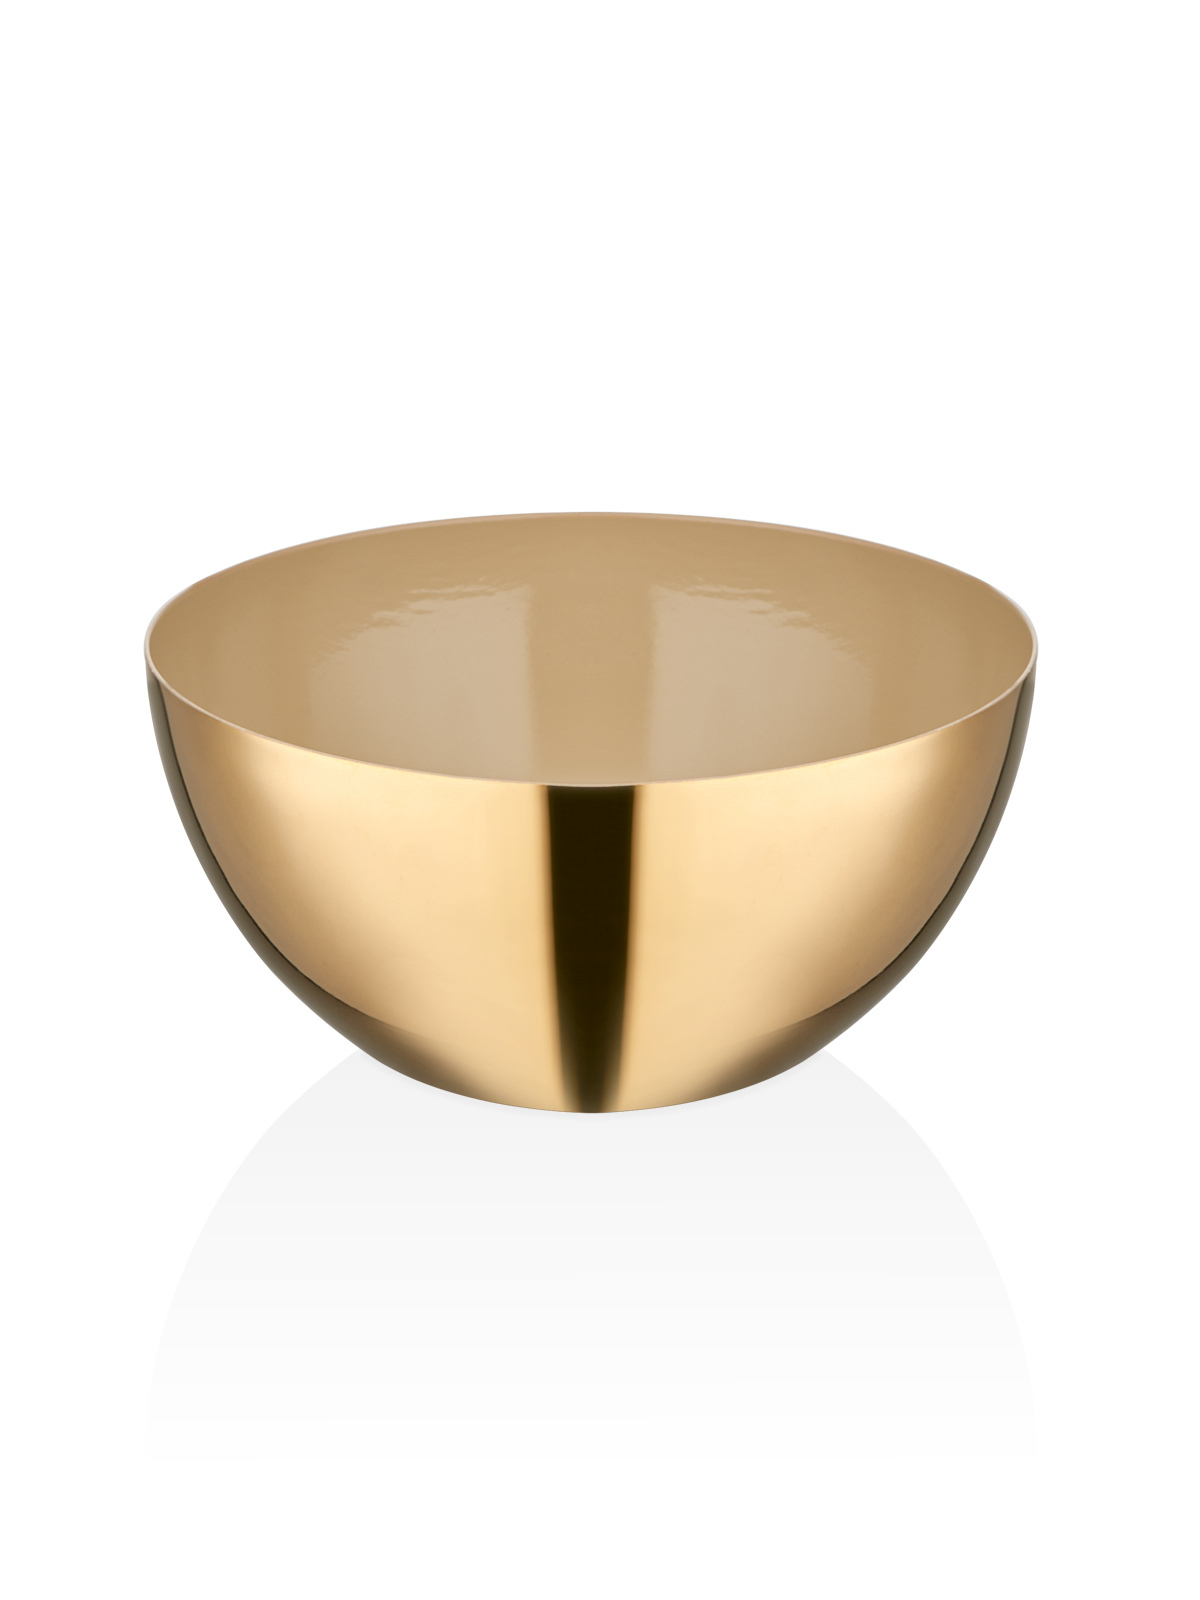 Star - Nut Bowl - Gold & Beige